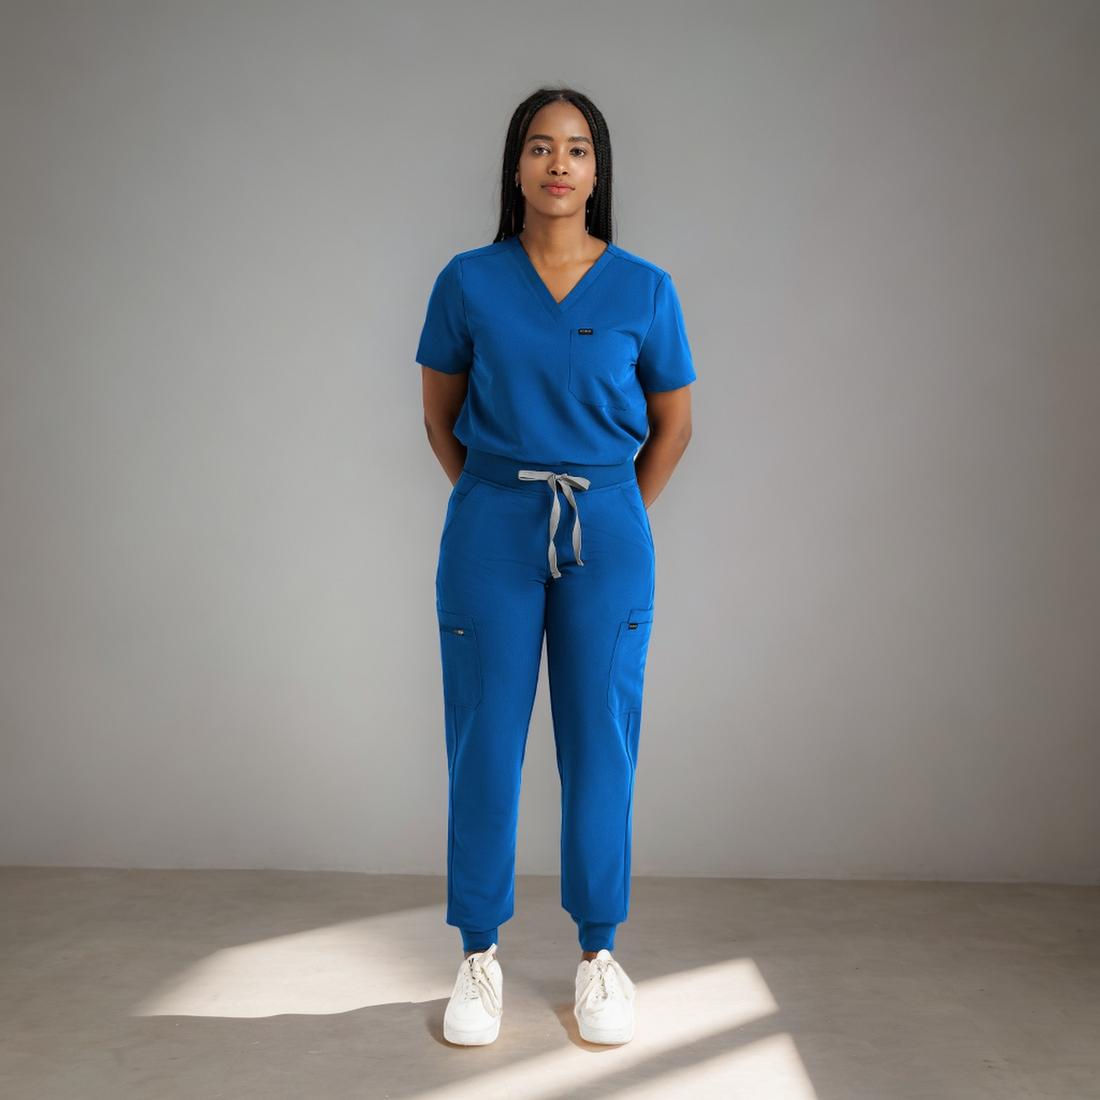 Royal Blue Yoga Waistband Women's Jogger Pants 8520 - The Nursing